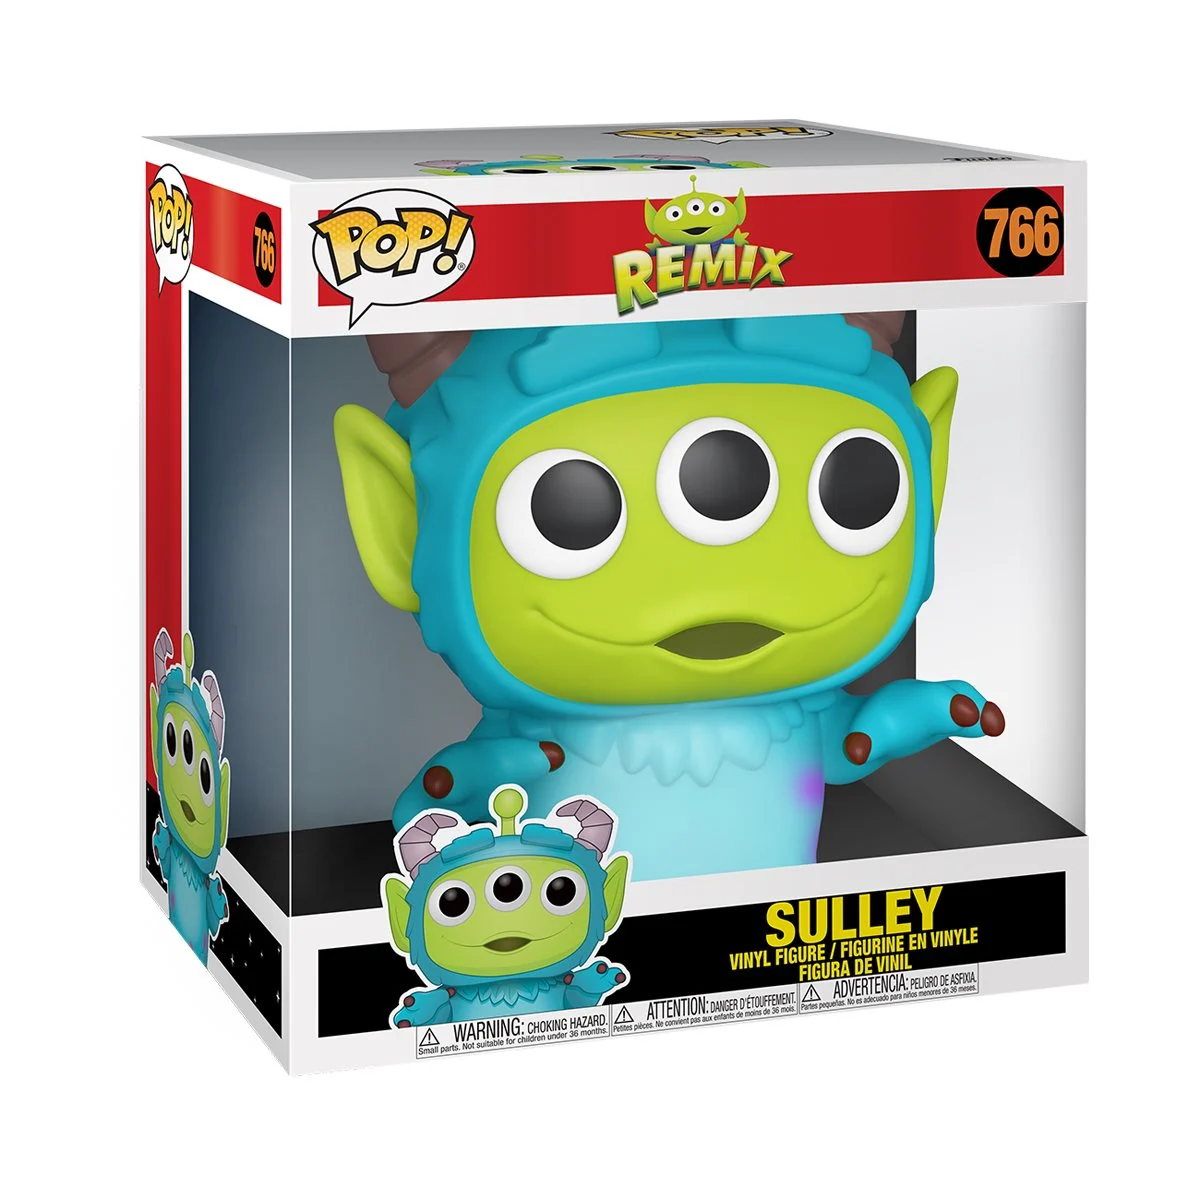 Disney Pixar Alien Remix Wave 2 Now Available For Pre-Order – Funko ...